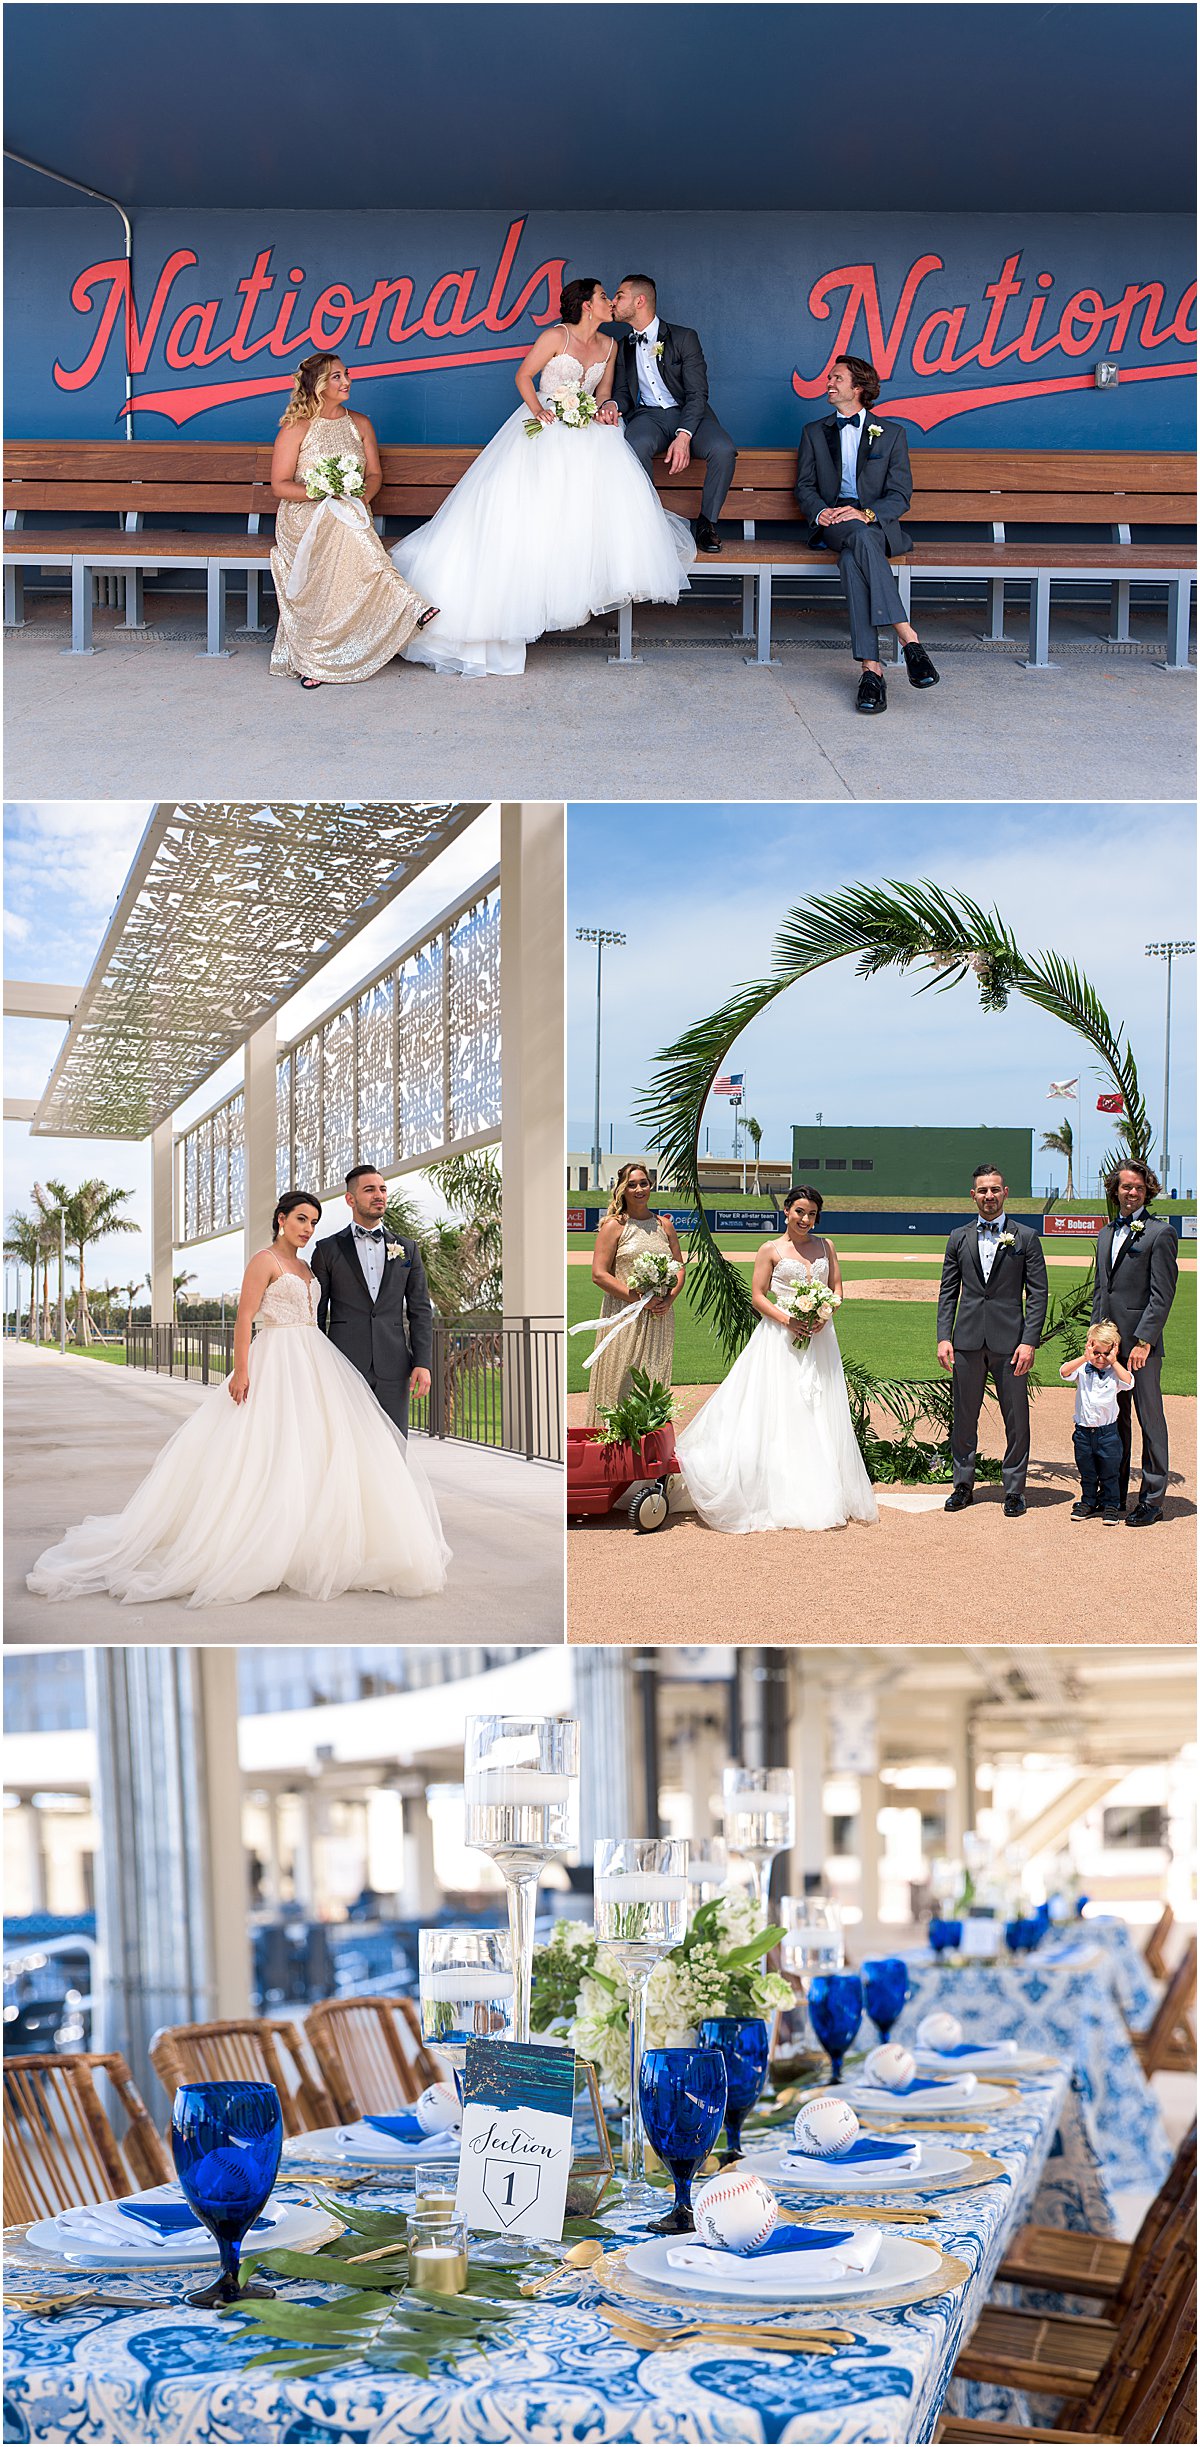 Ballpark of the Palm Beaches | Top Palm Beach Wedding Venue | Married in Palm Beach | www.marriedinpalmbeach.com | Robert Madrid Photography